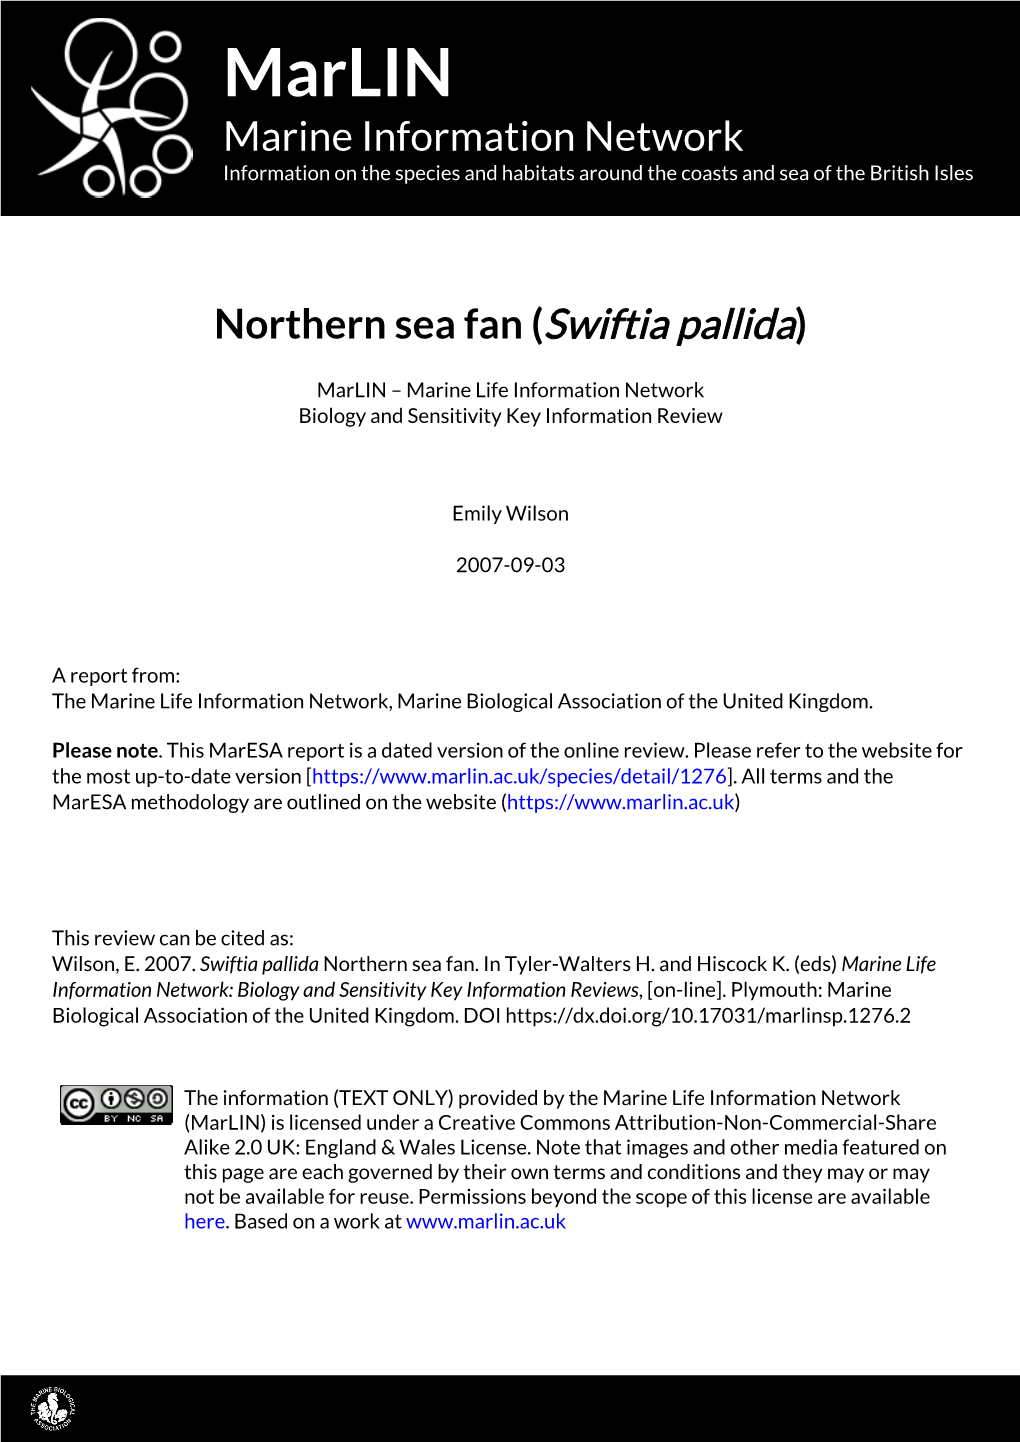 Northern Sea Fan (Swiftia Pallida)